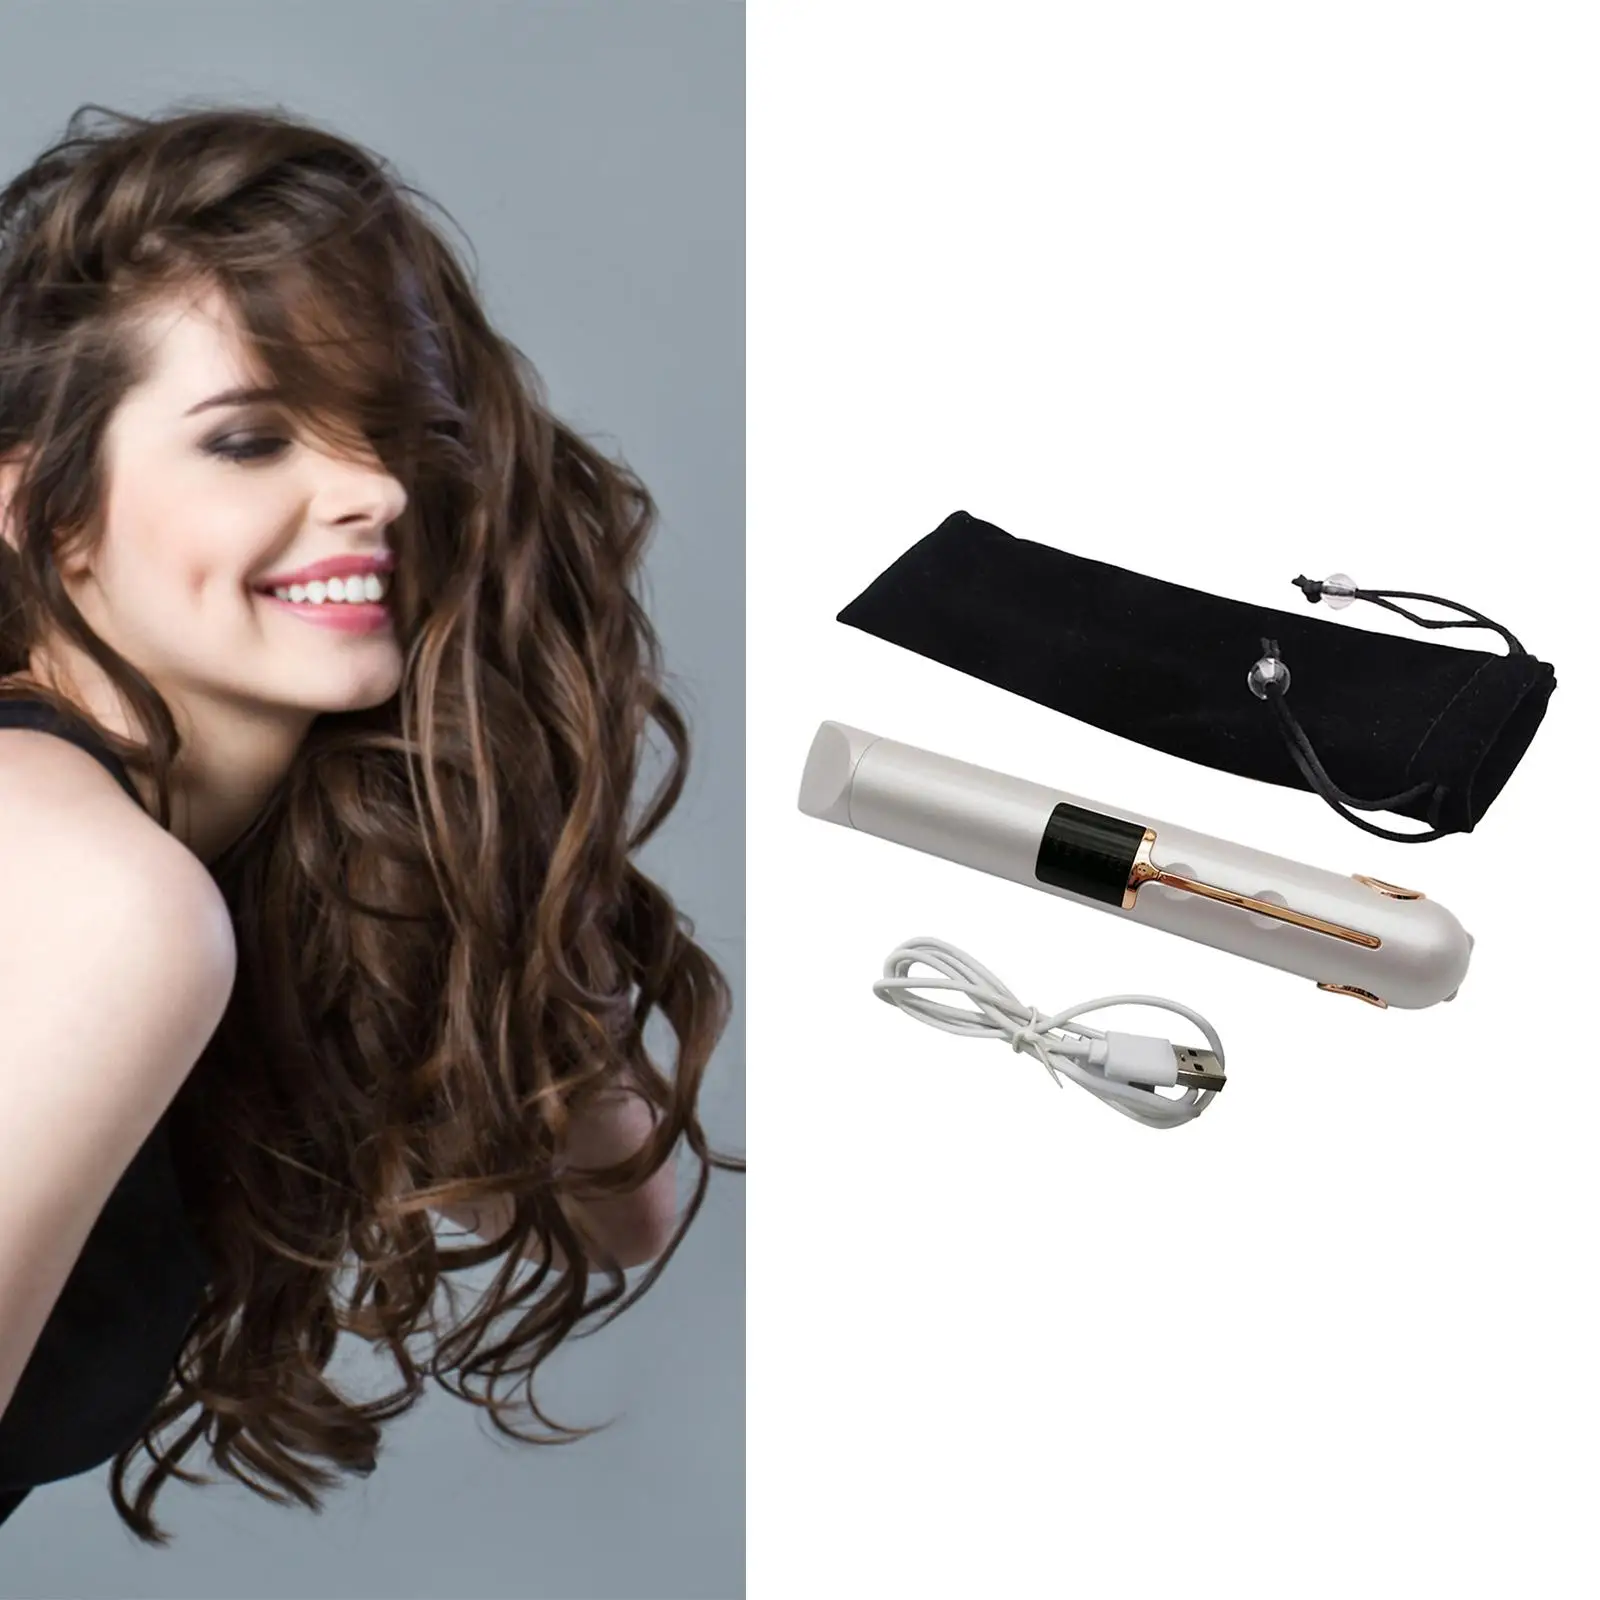 Cordless Hair Curler Straightener 3 Temp USB Charging ABS Styling Tools for Salon Hair Straightening Hair Styling DIY Women Men